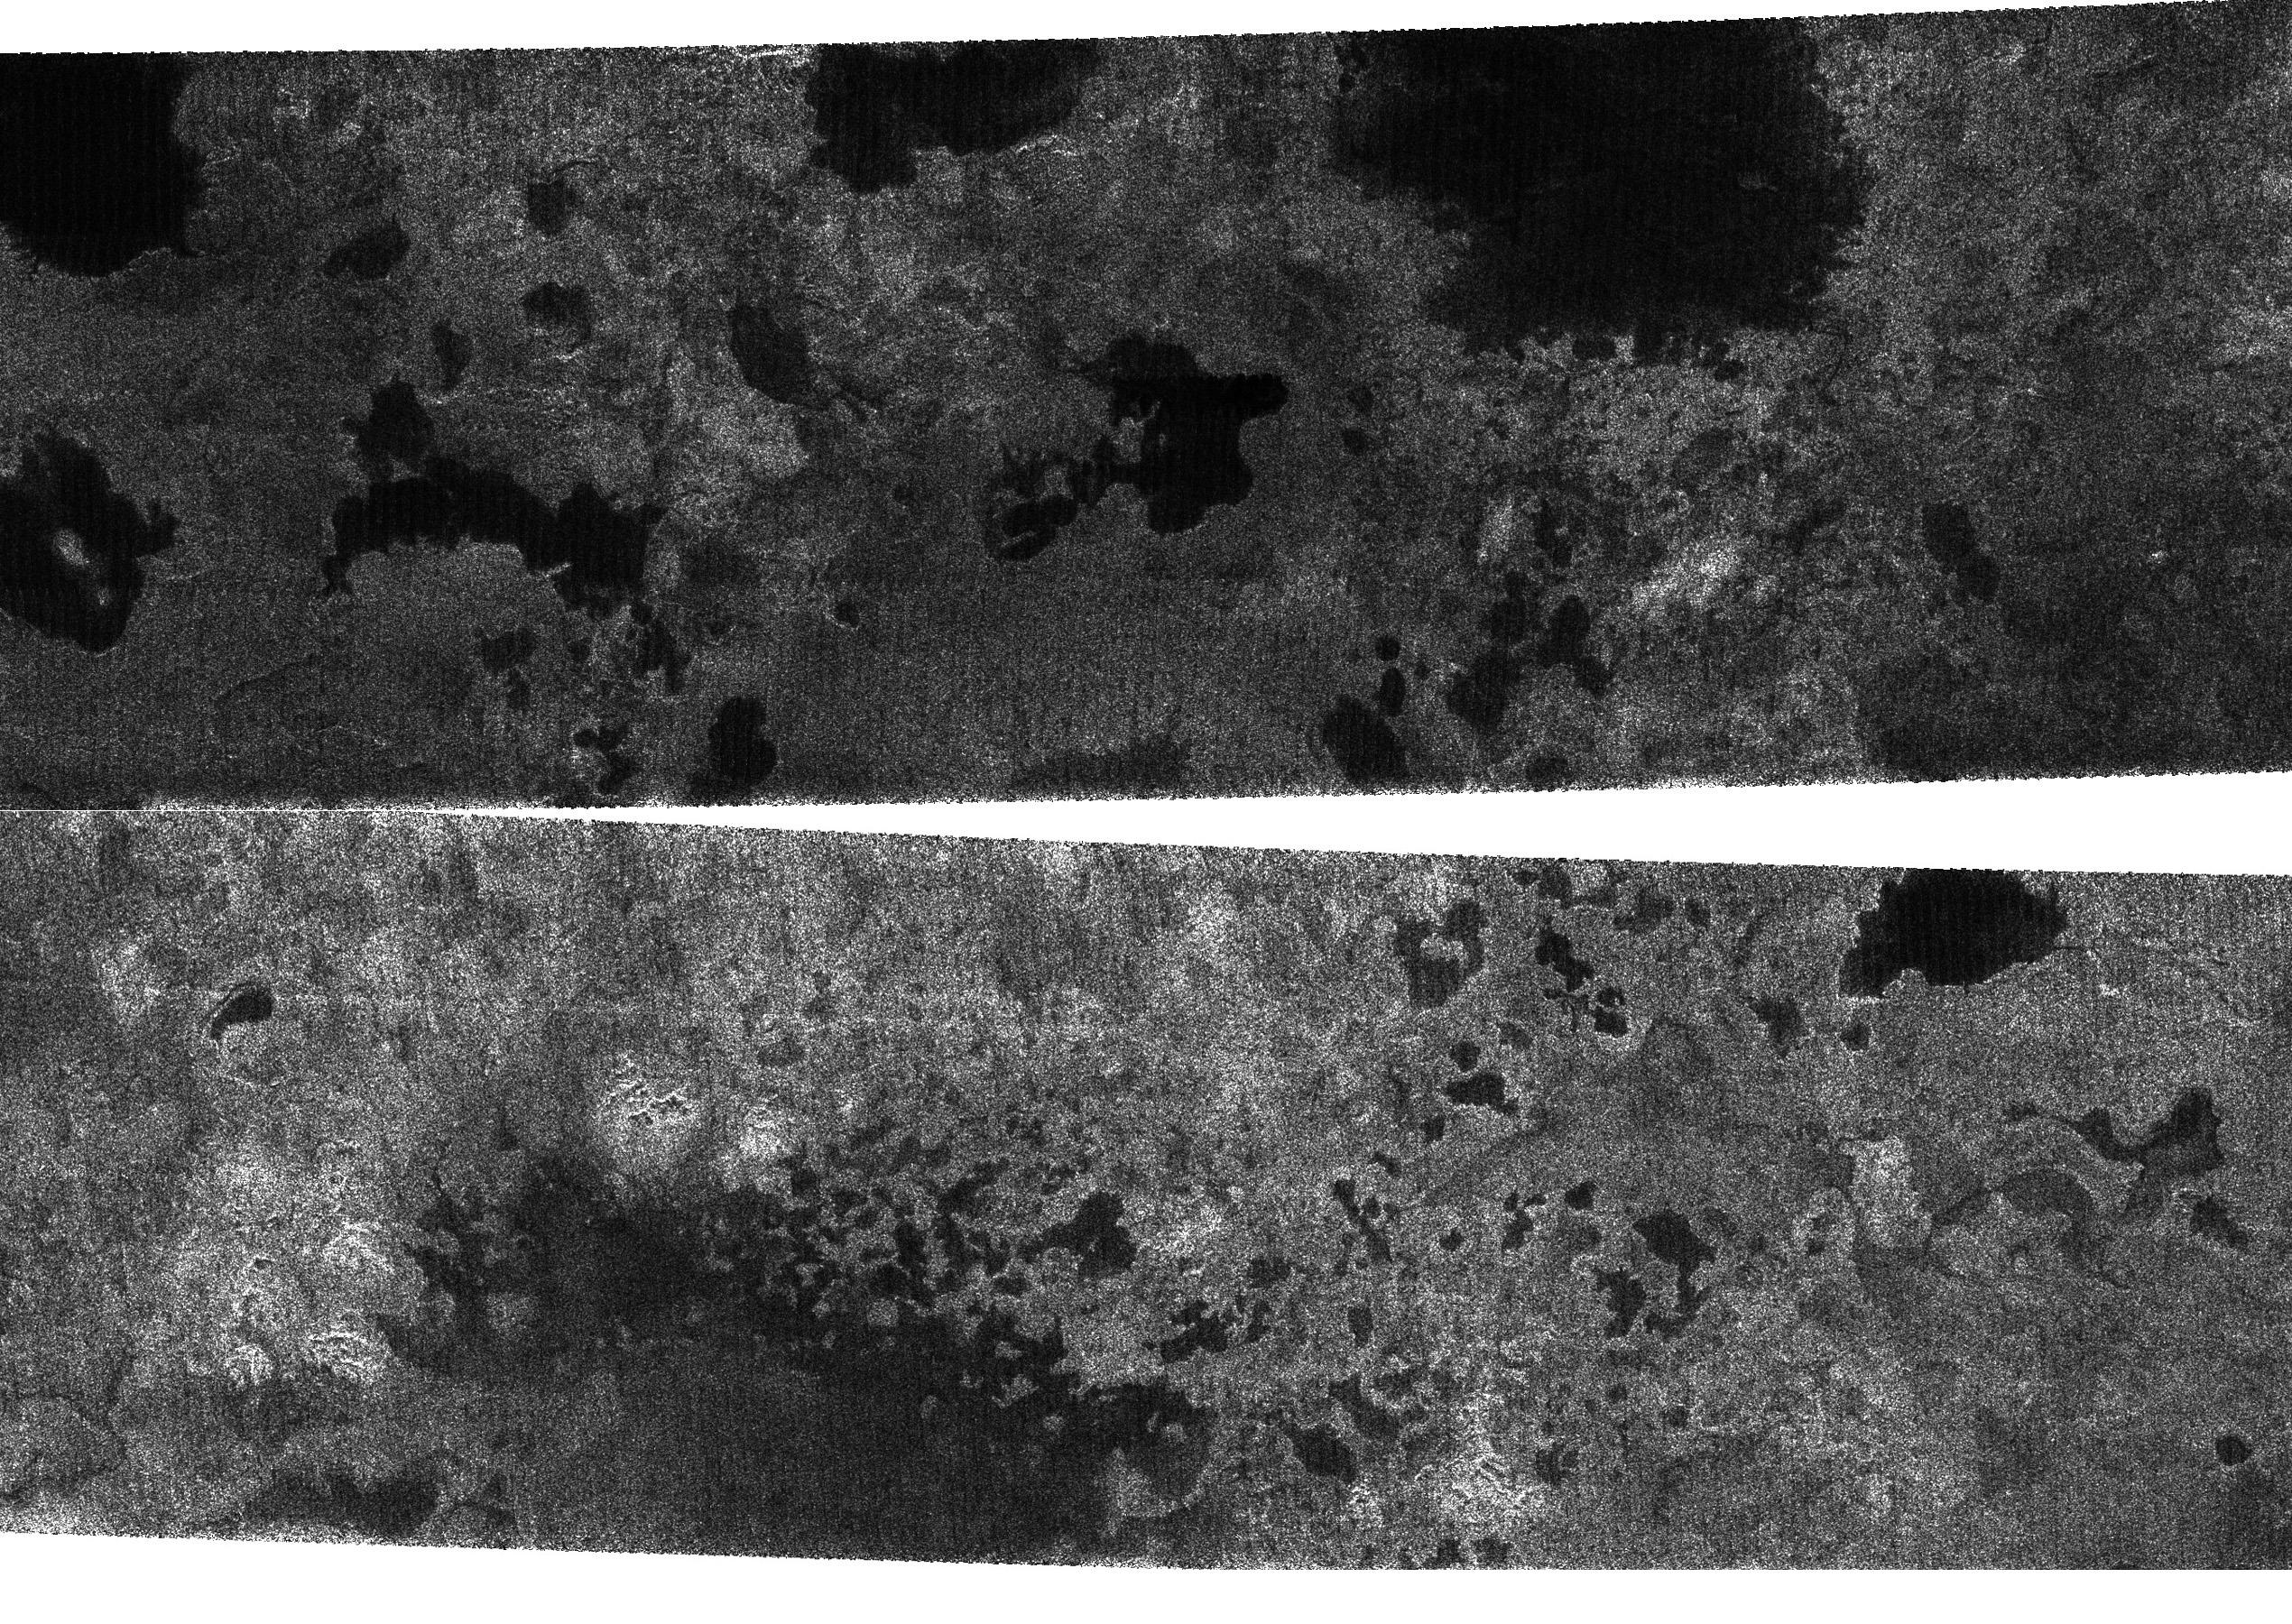 Two radar views of Titan